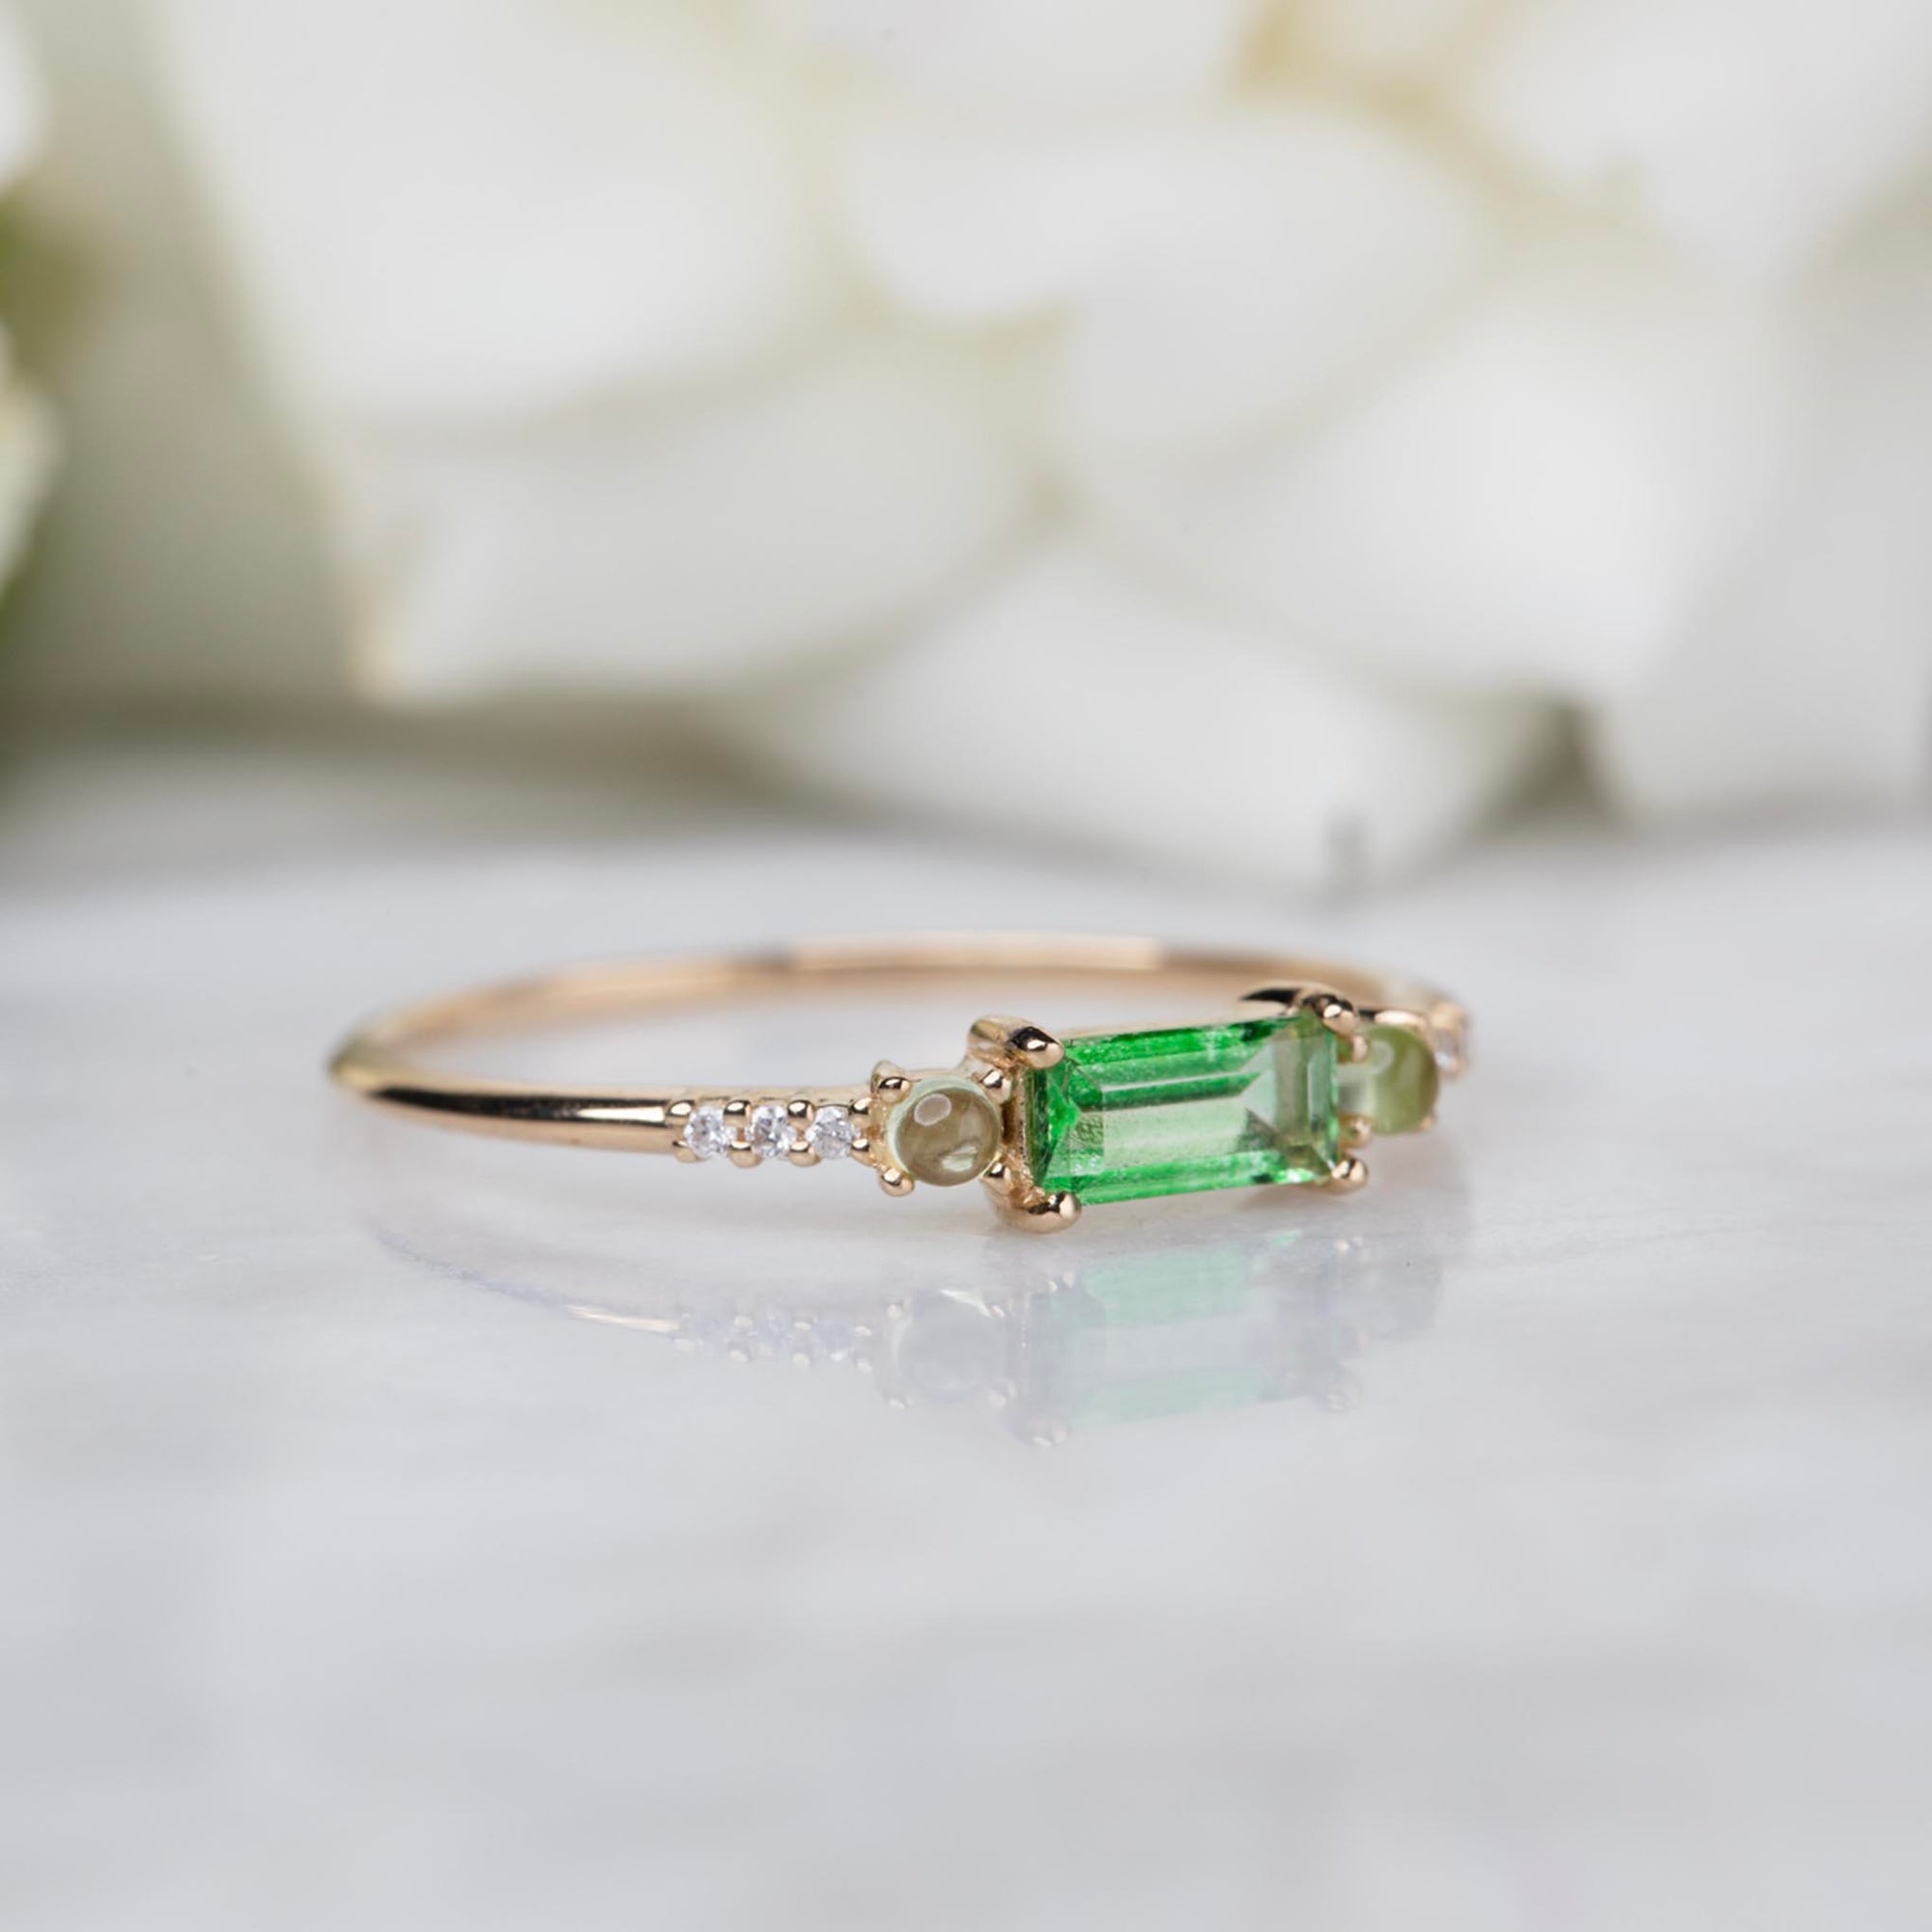 Green amethyst engagement ring